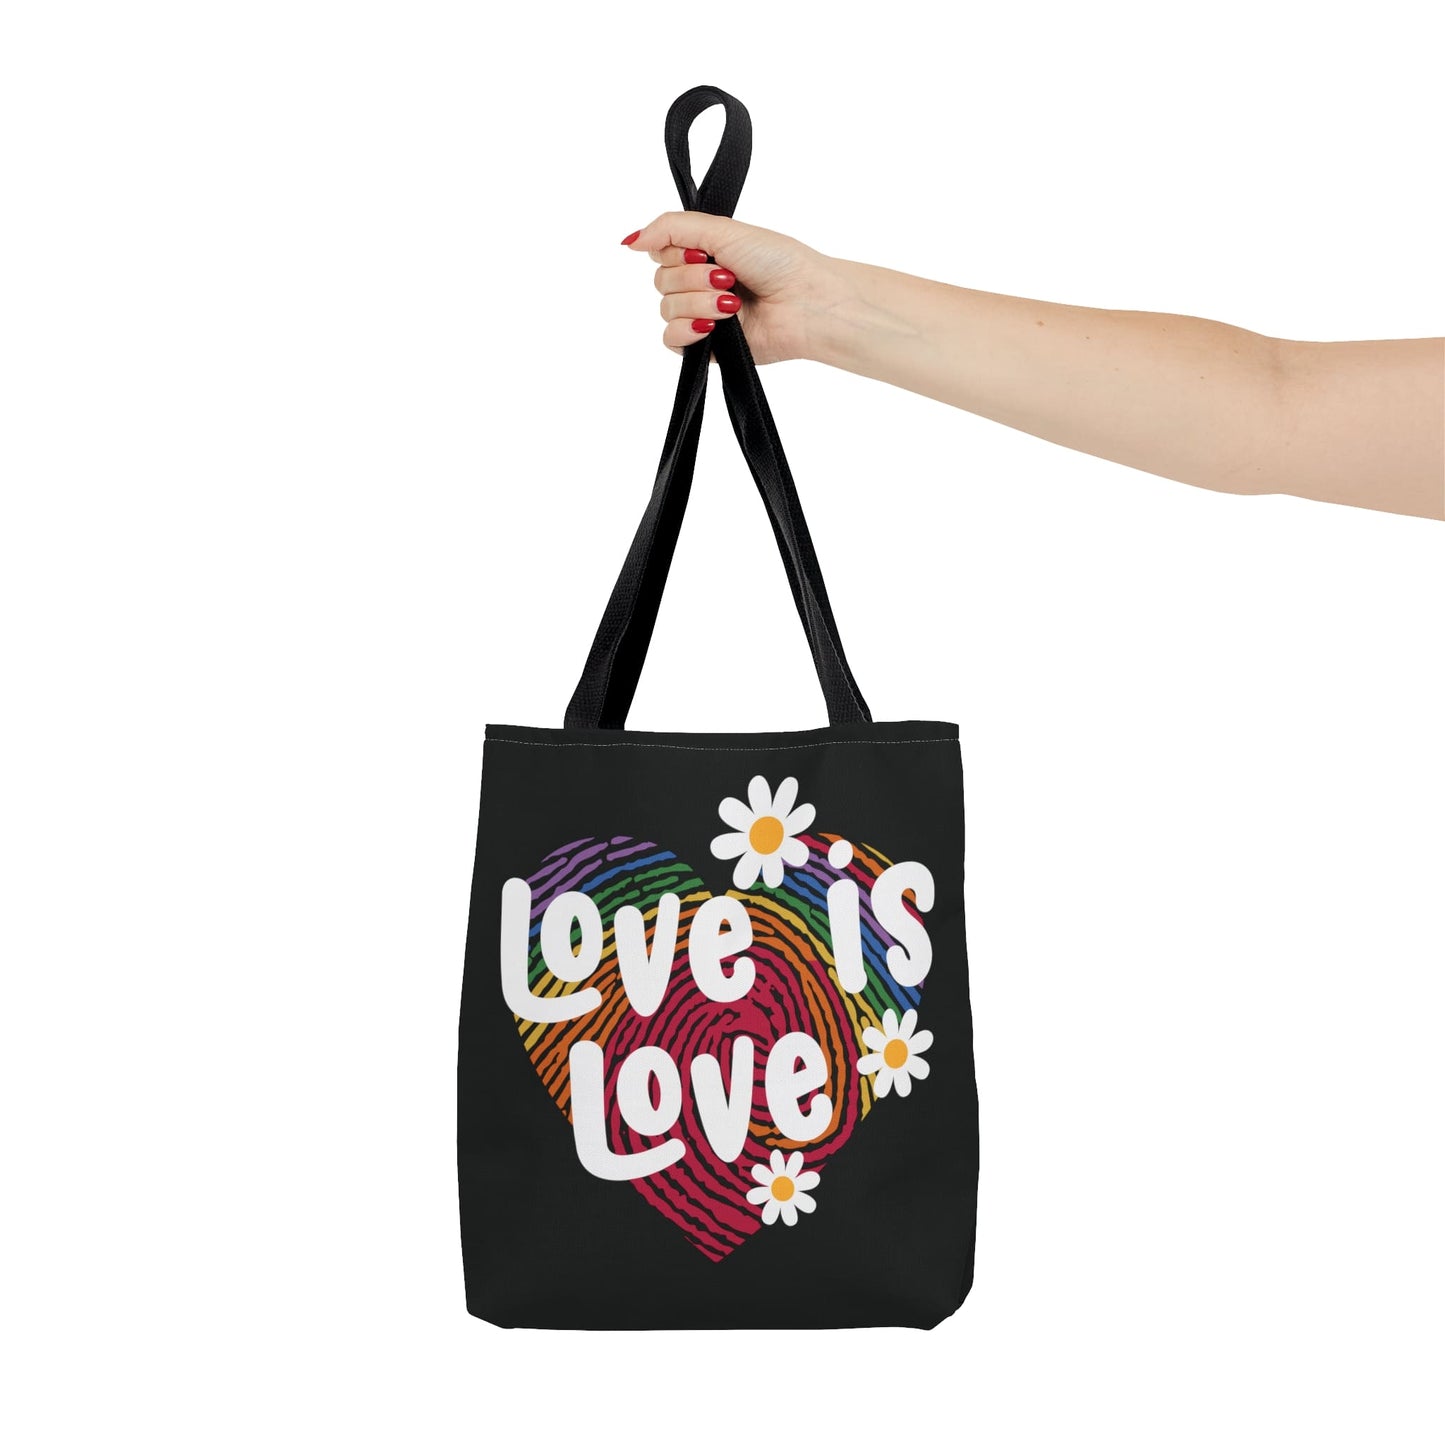 LGBT pride tote bag, love is love bag, small